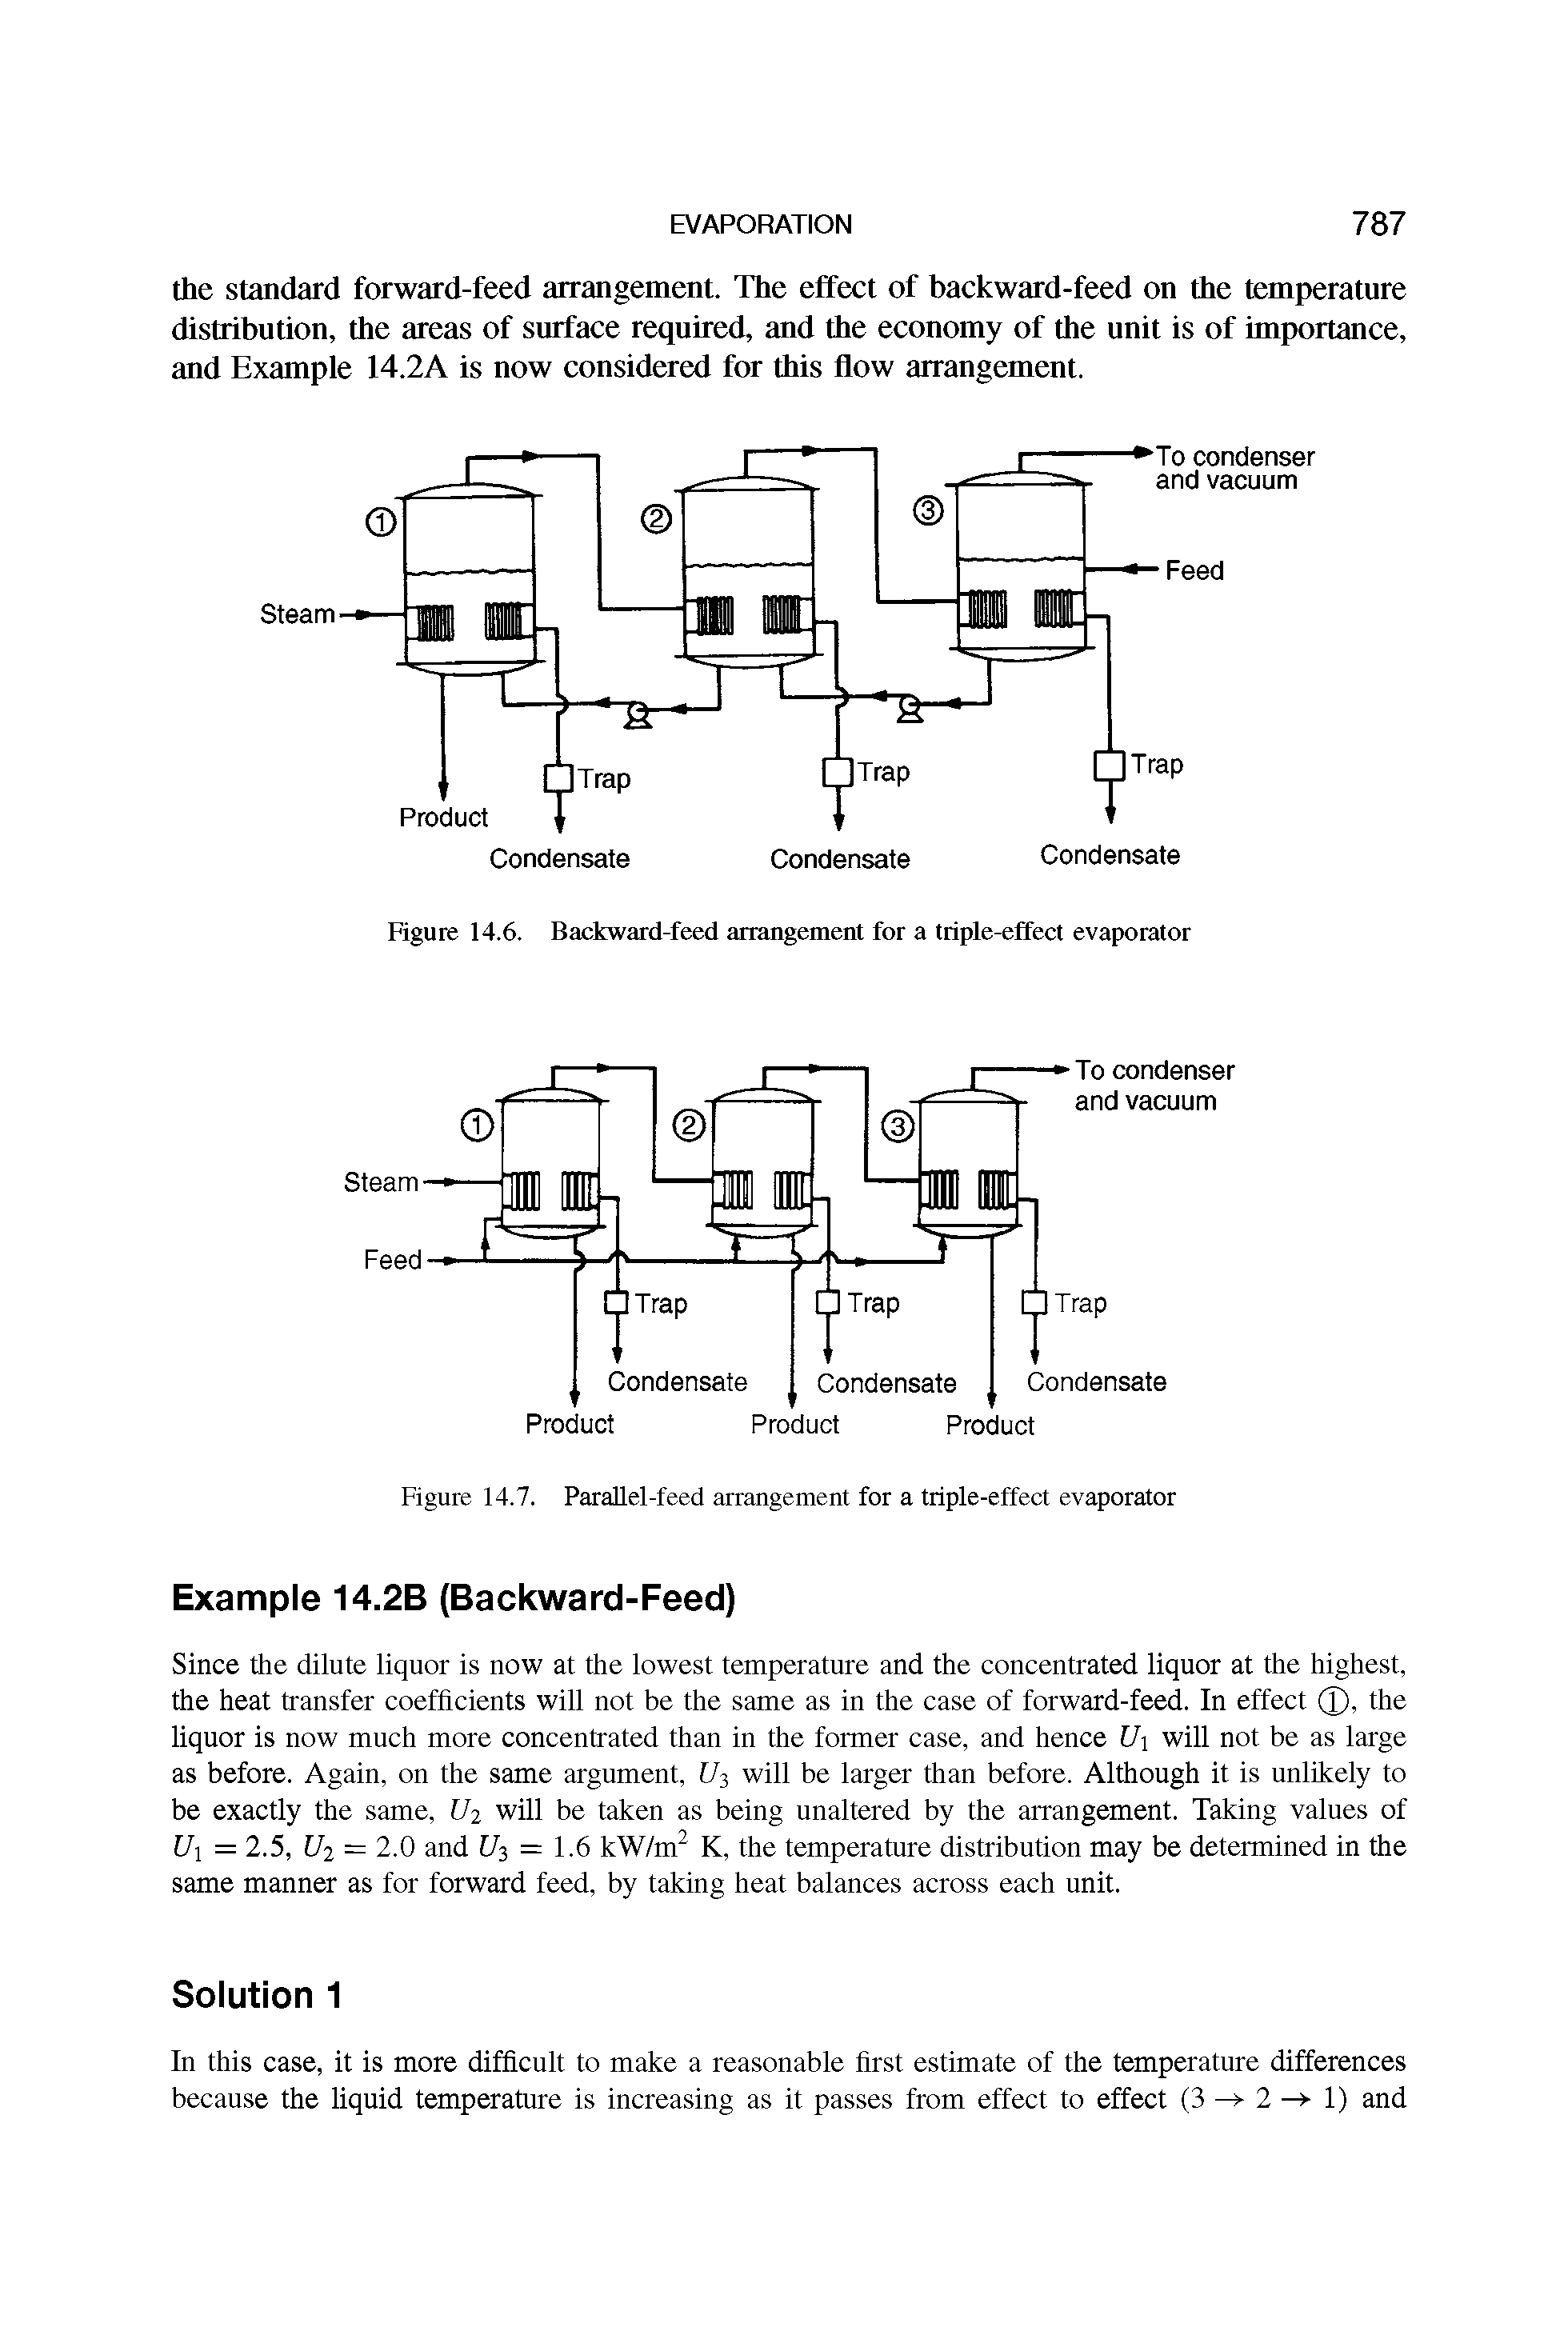 Figure 14.6. Backward-feed arrangement for a triple-effect evaporator...